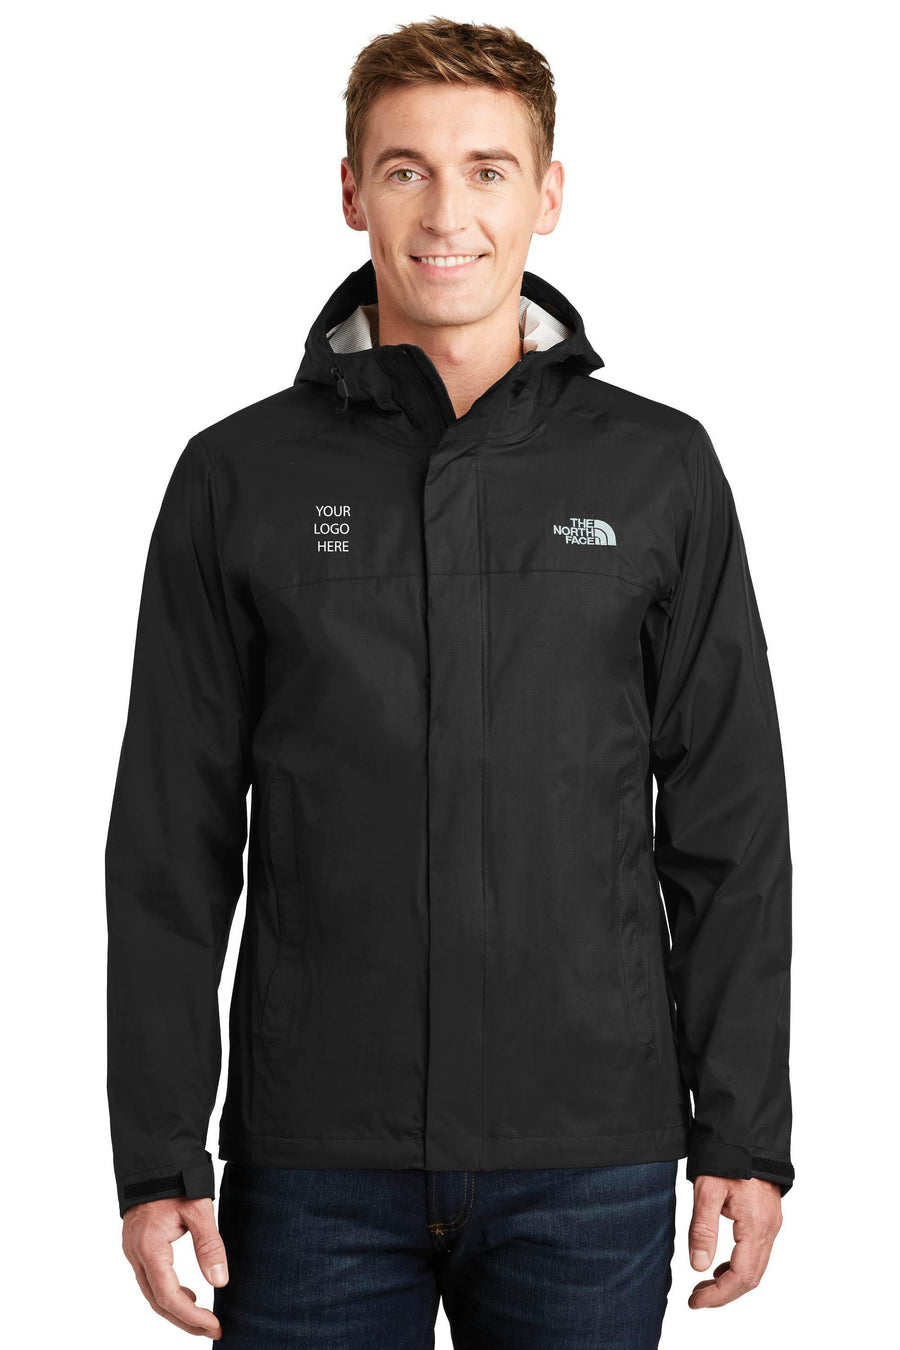 Keller Williams KW-SMNF0A3LH4 North Face® Men's DryVent Rain Jacket 